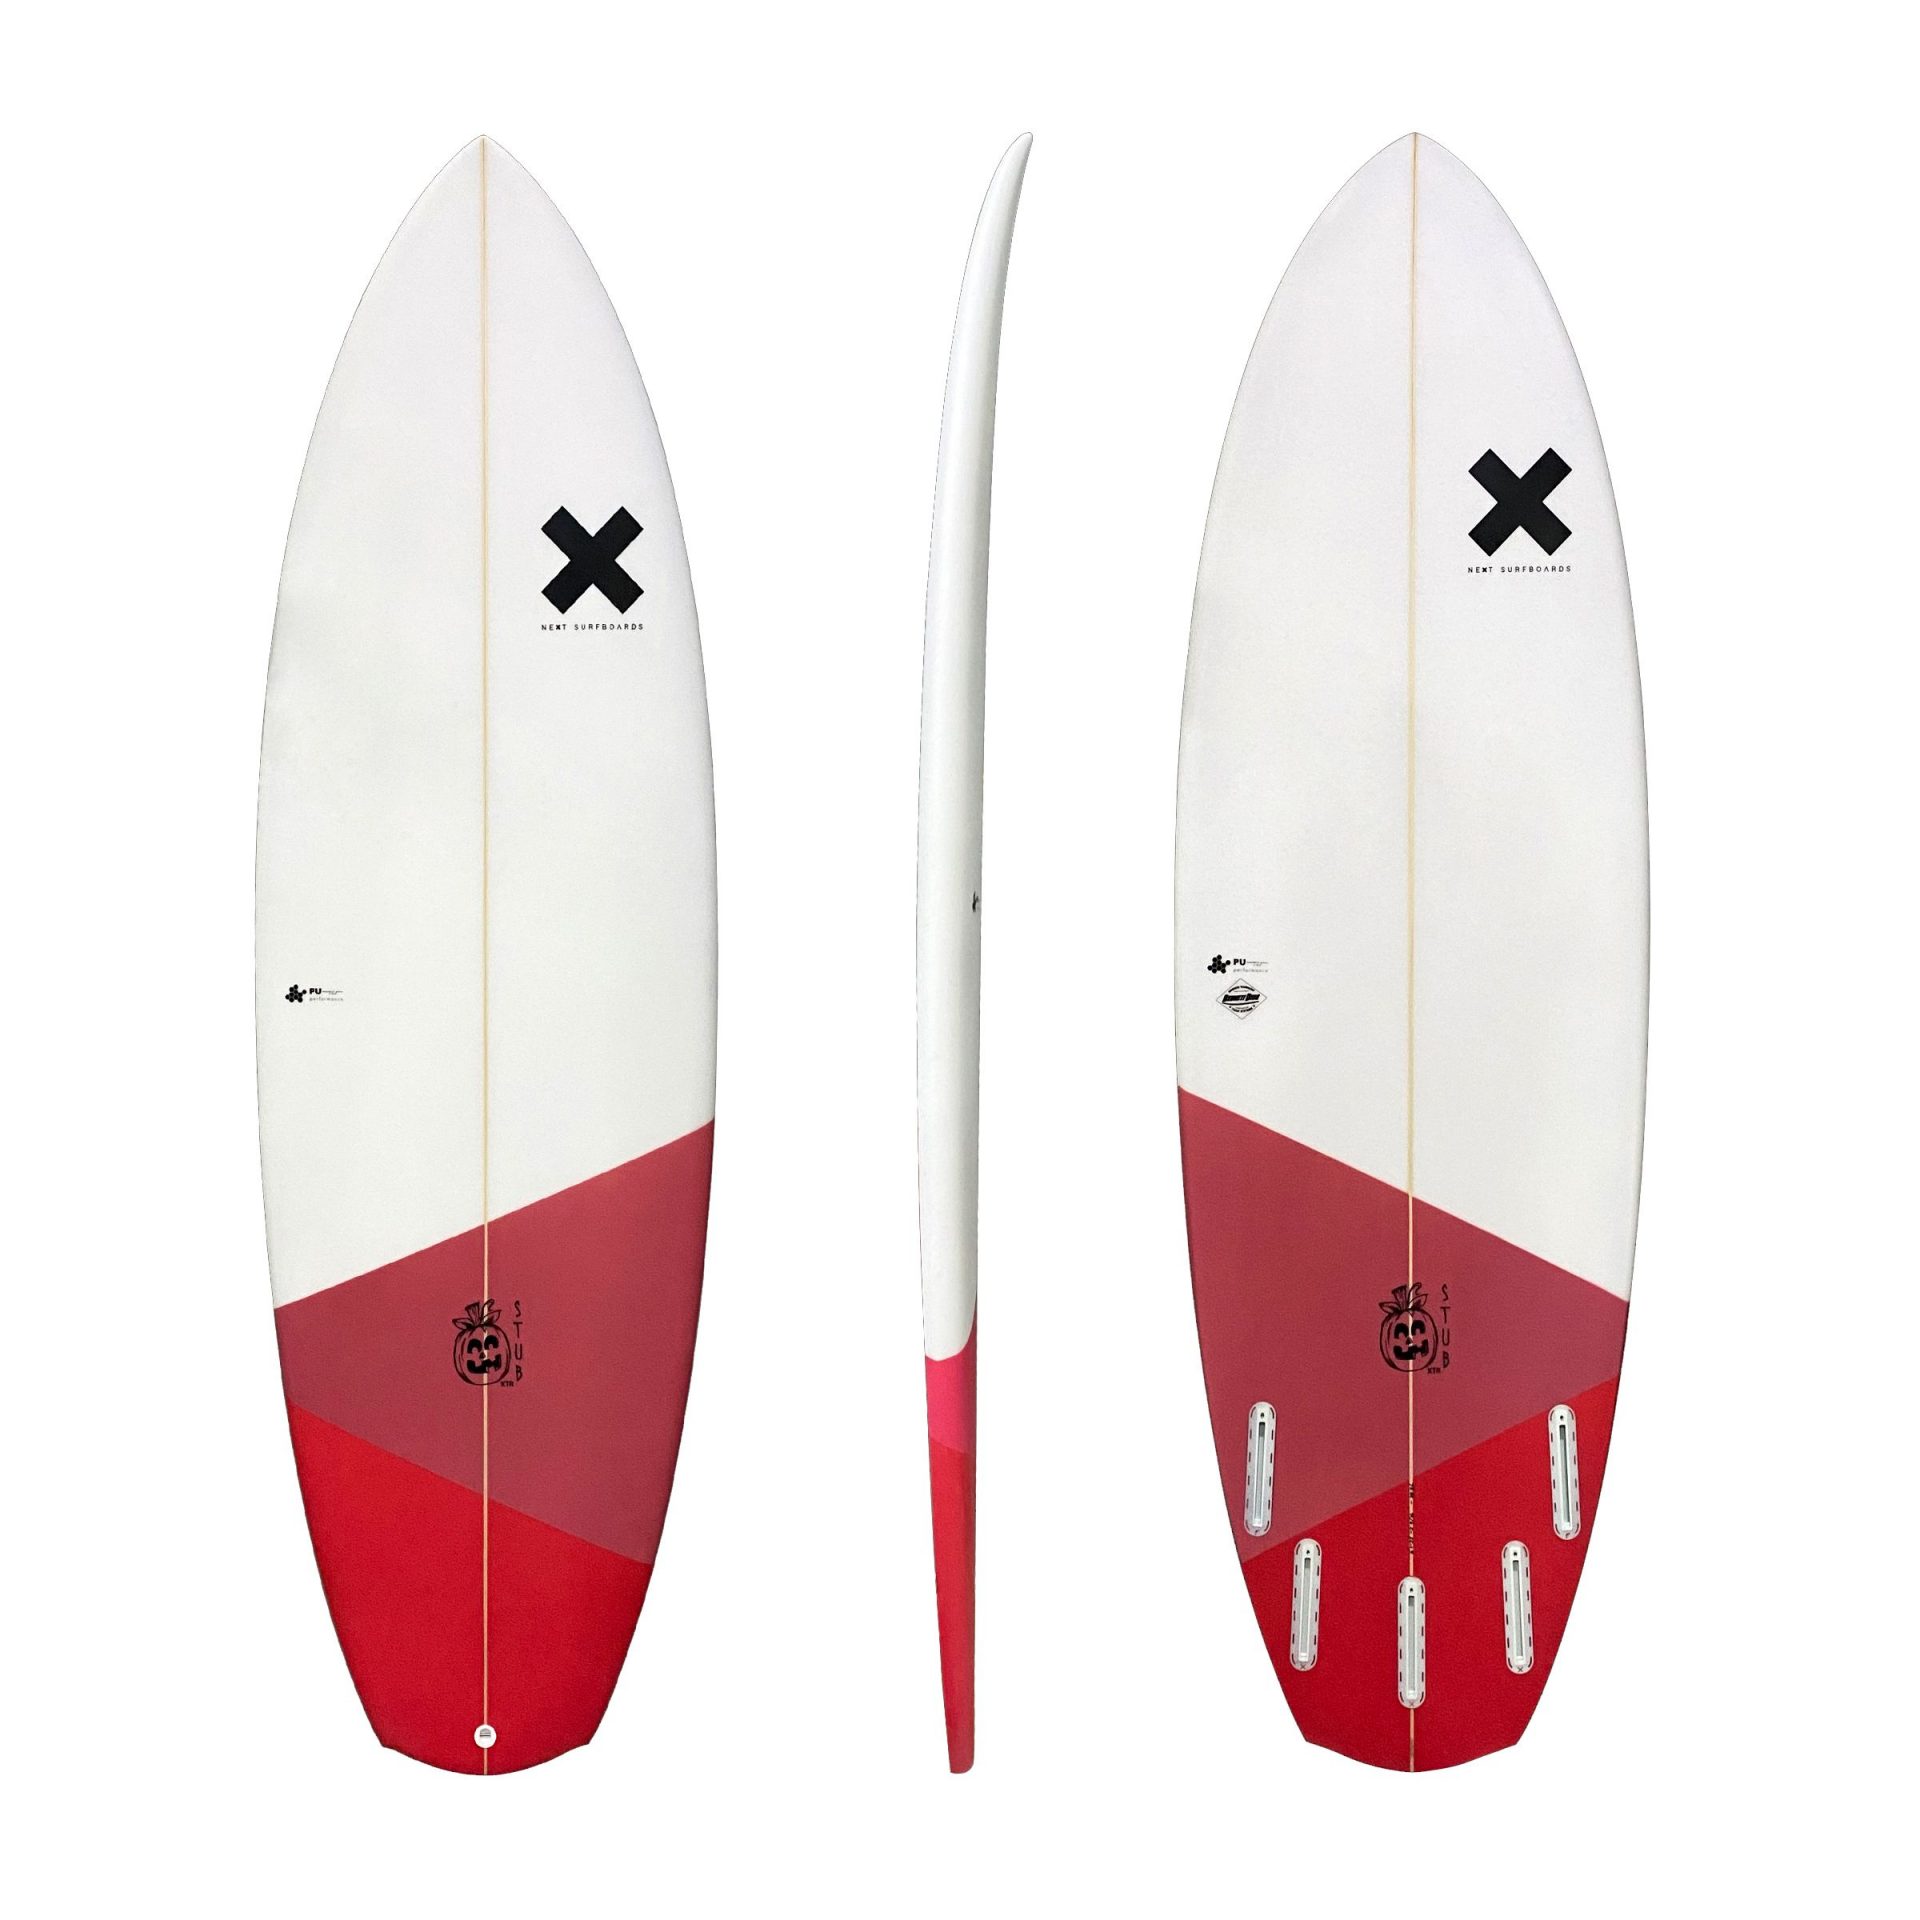 Next surfboards STUB-A